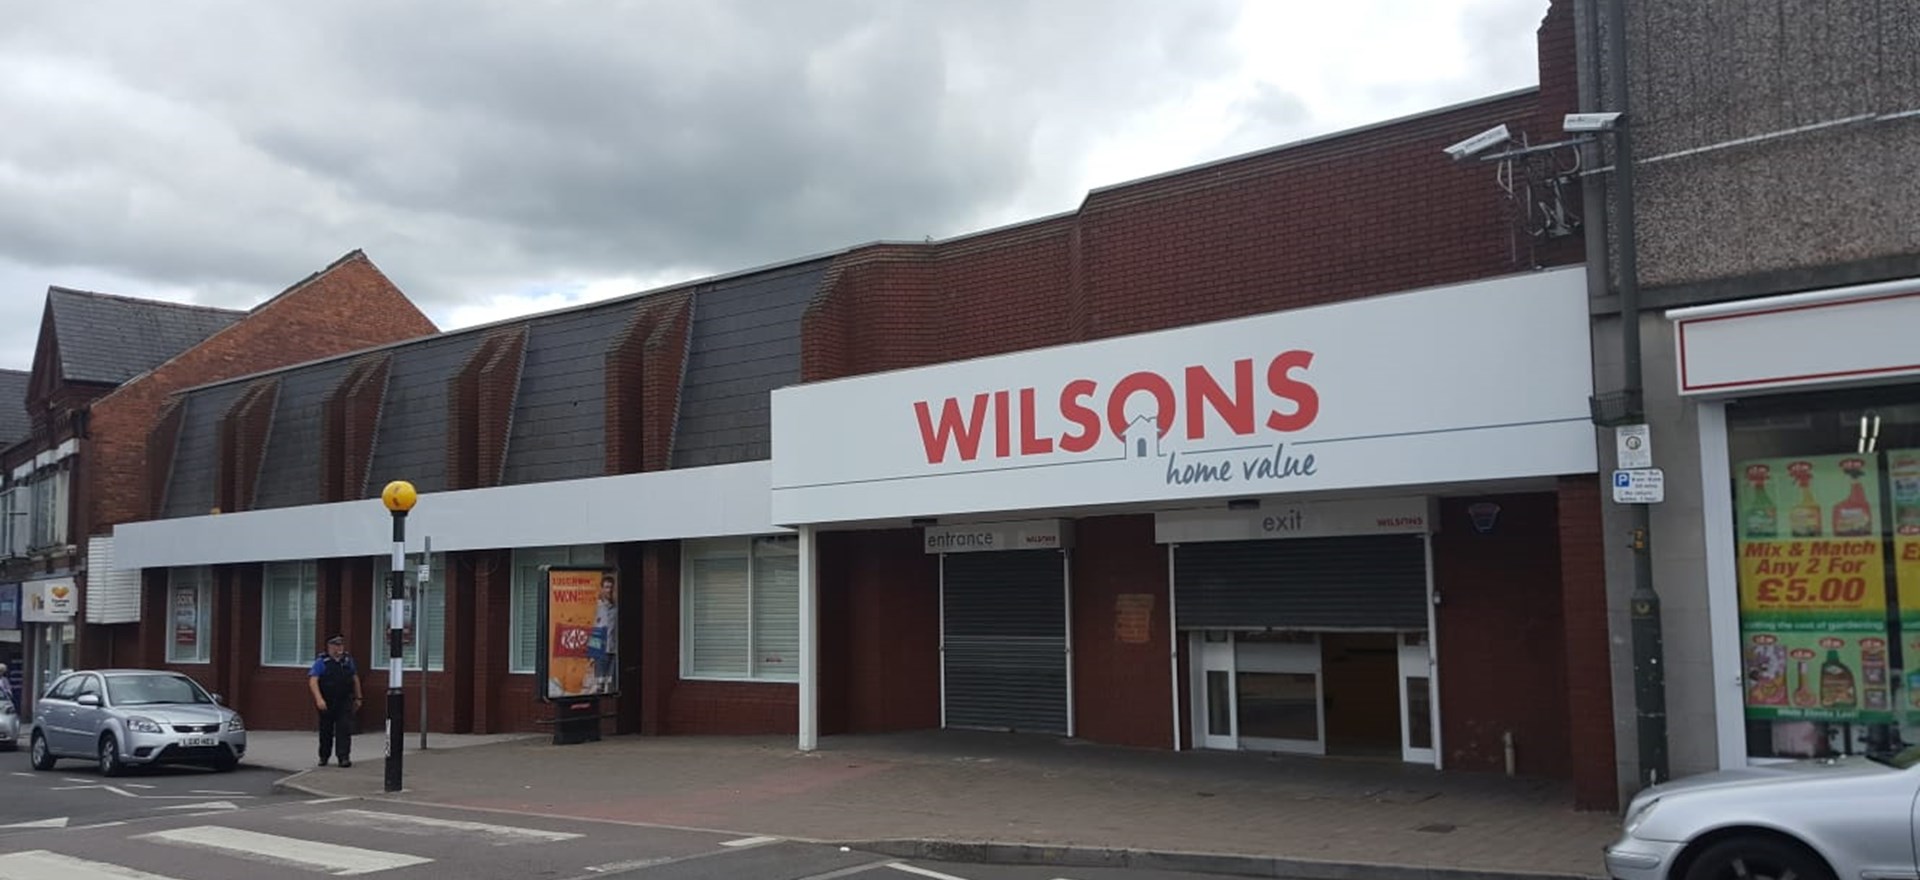 Wilson Homes Shop Signage Nottingham